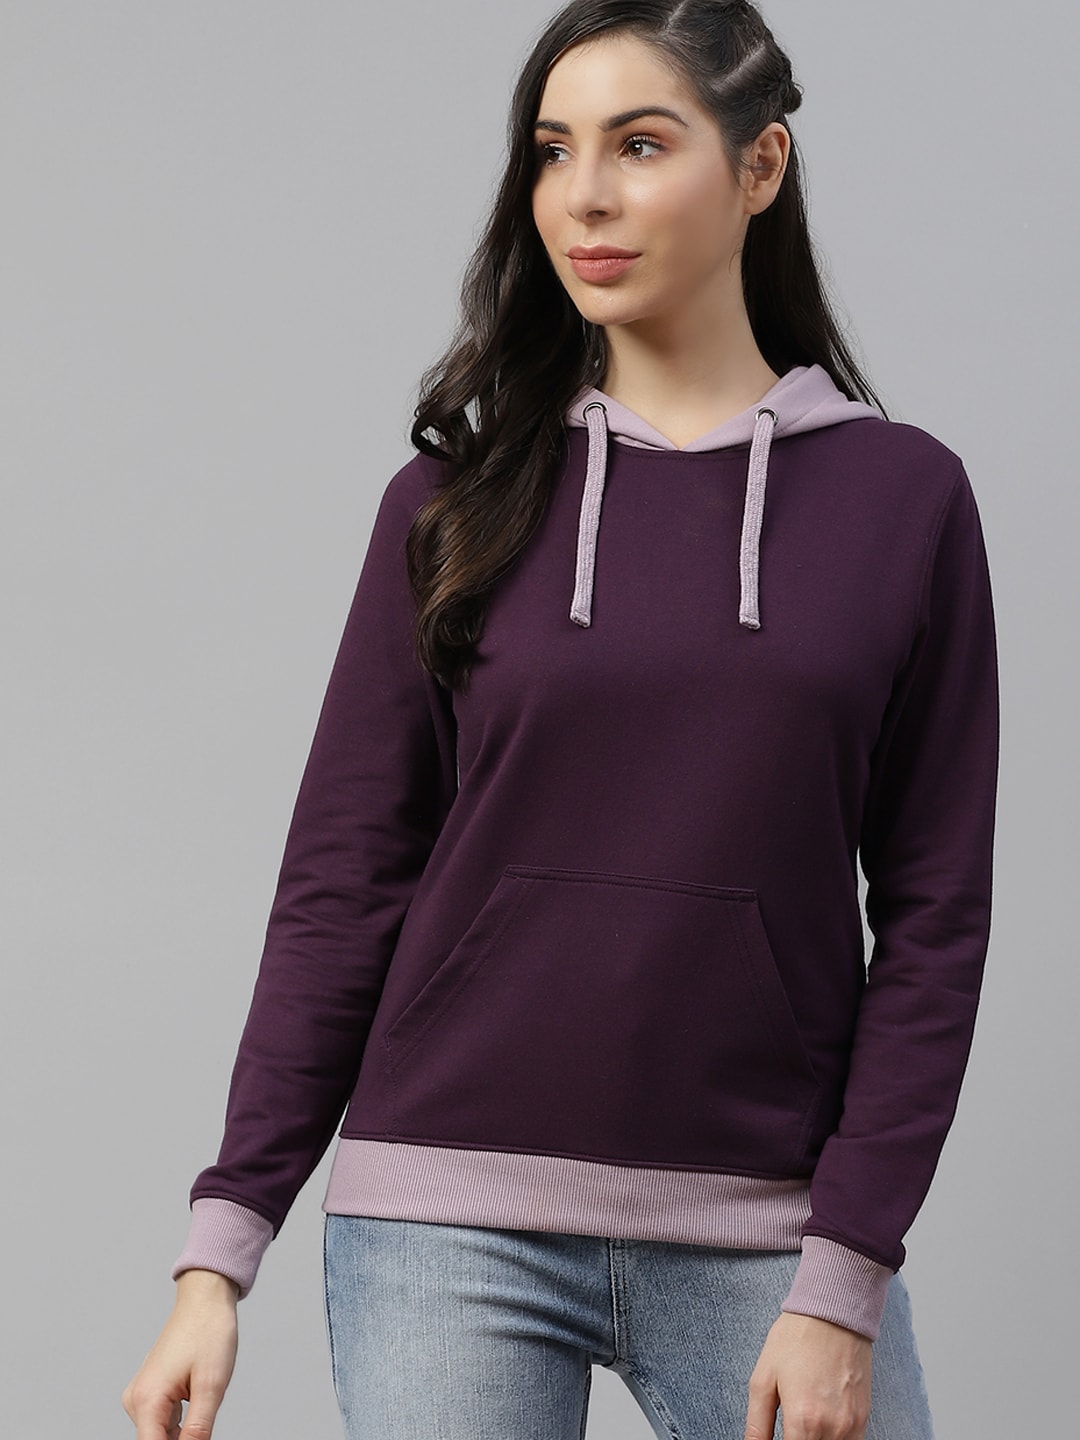 Roadster Women Purple Solid Hooded Pullover Sweatshirt Price in India